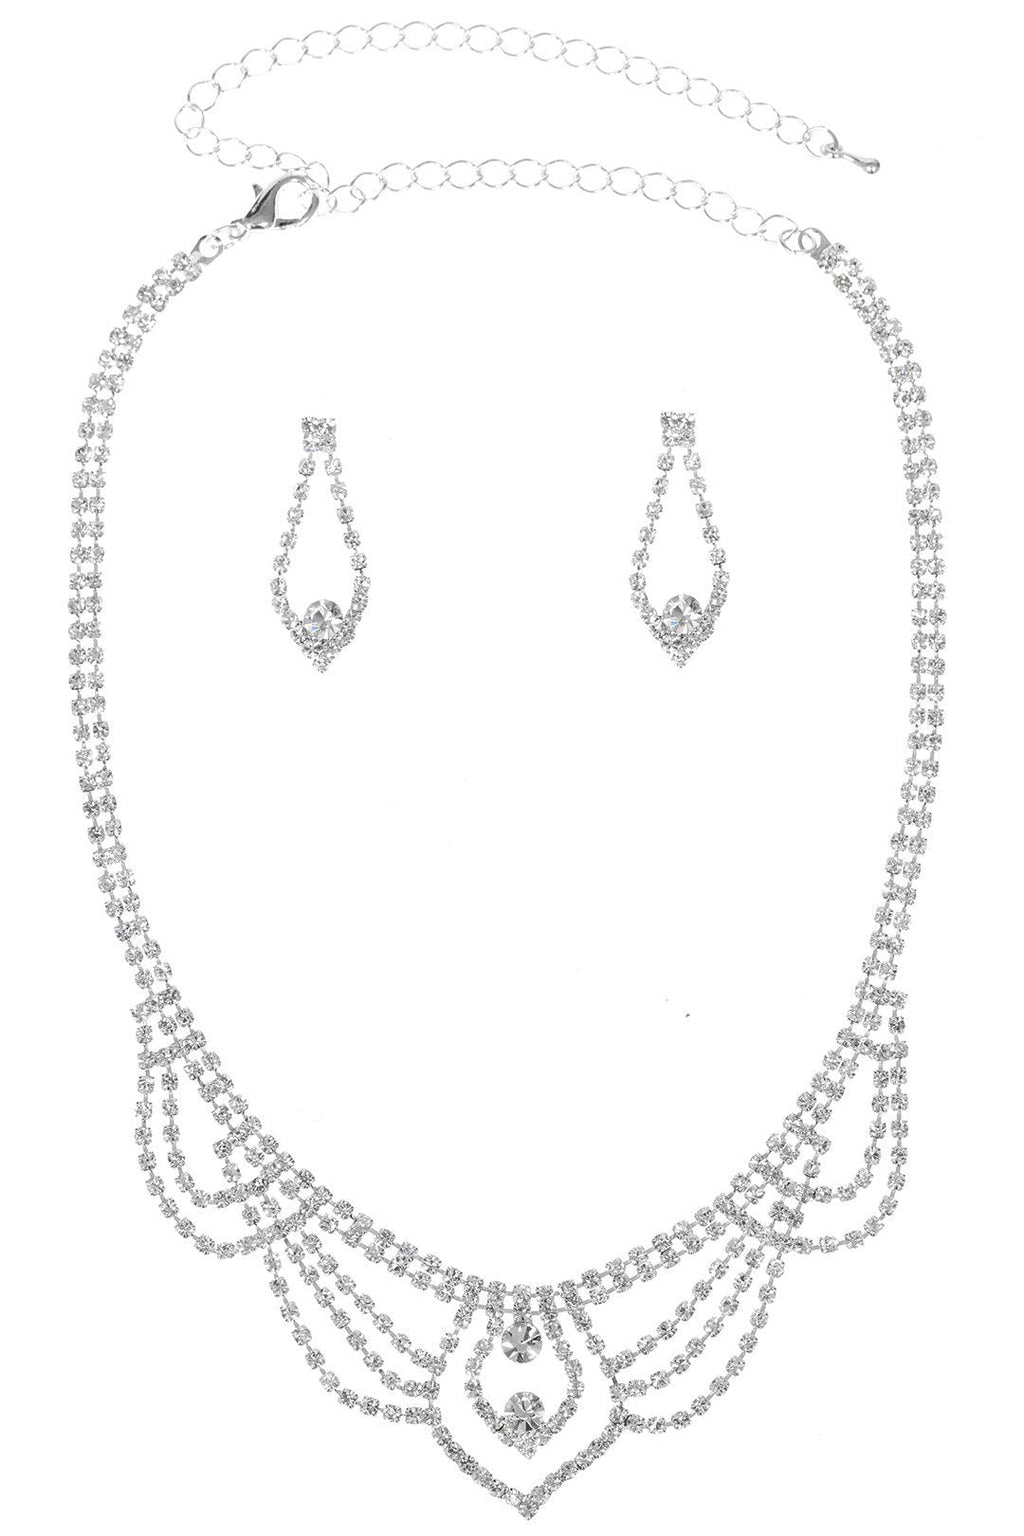 [Australia] - SAMKY Rhinestone Crystal Chandelier Drape Necklace Earrings Set N319 